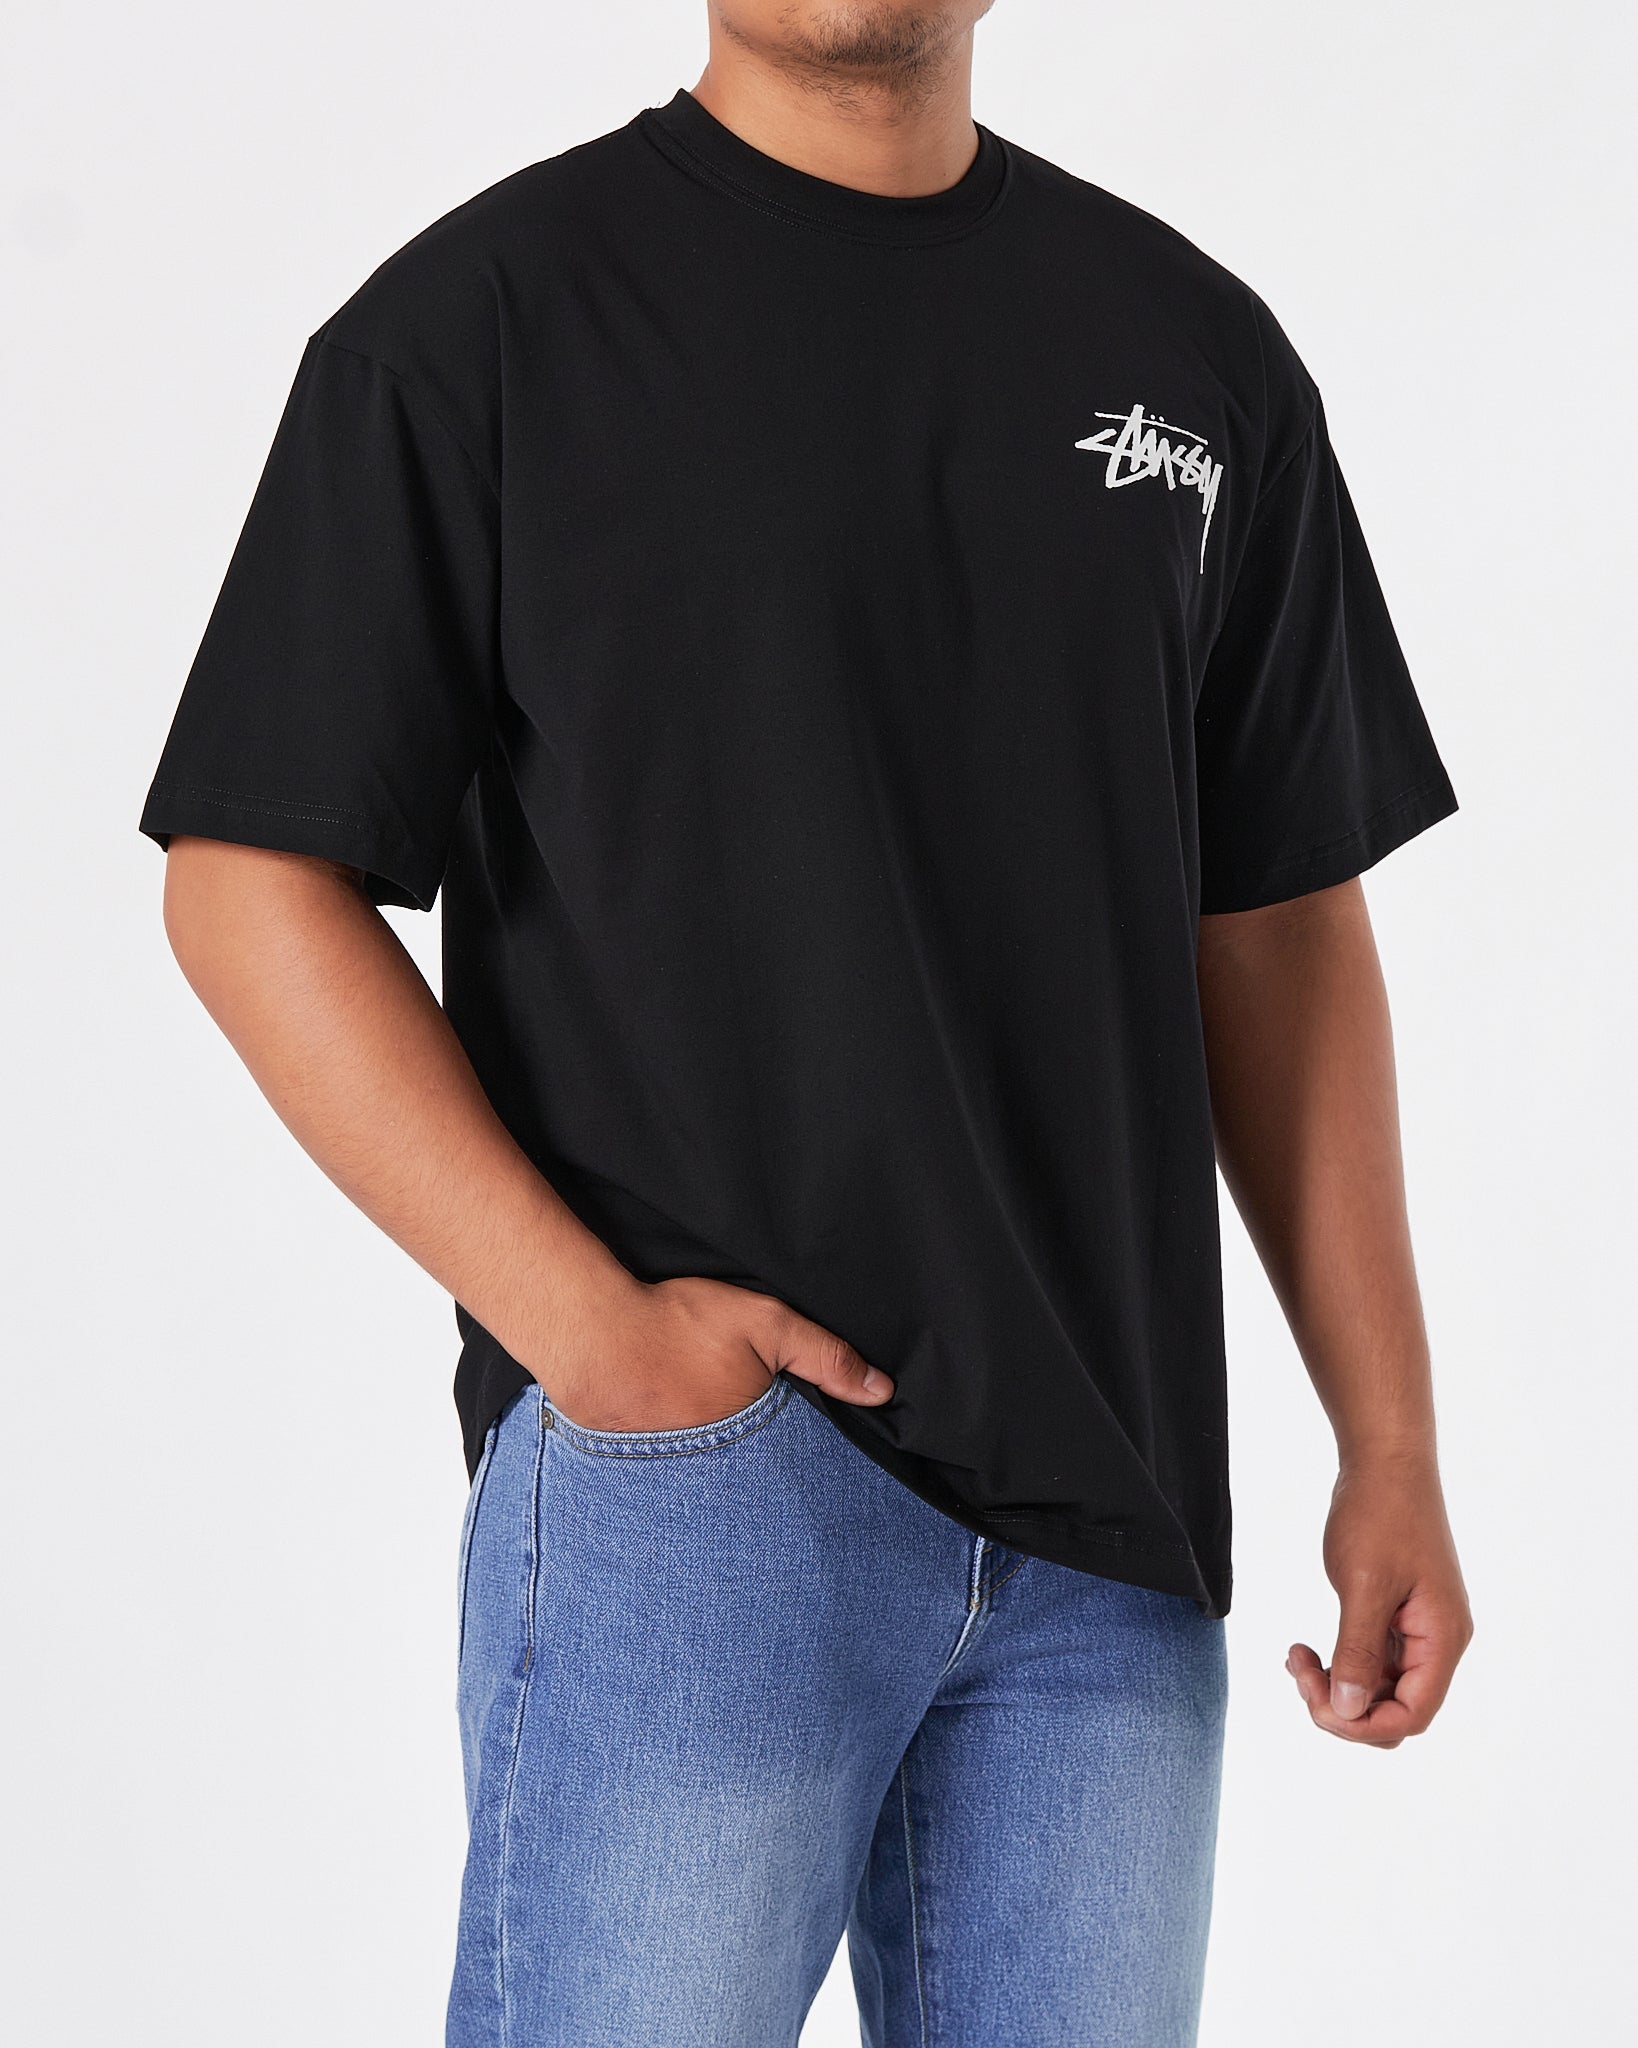 STU Deck 2 Men Black T-Shirt 21.90